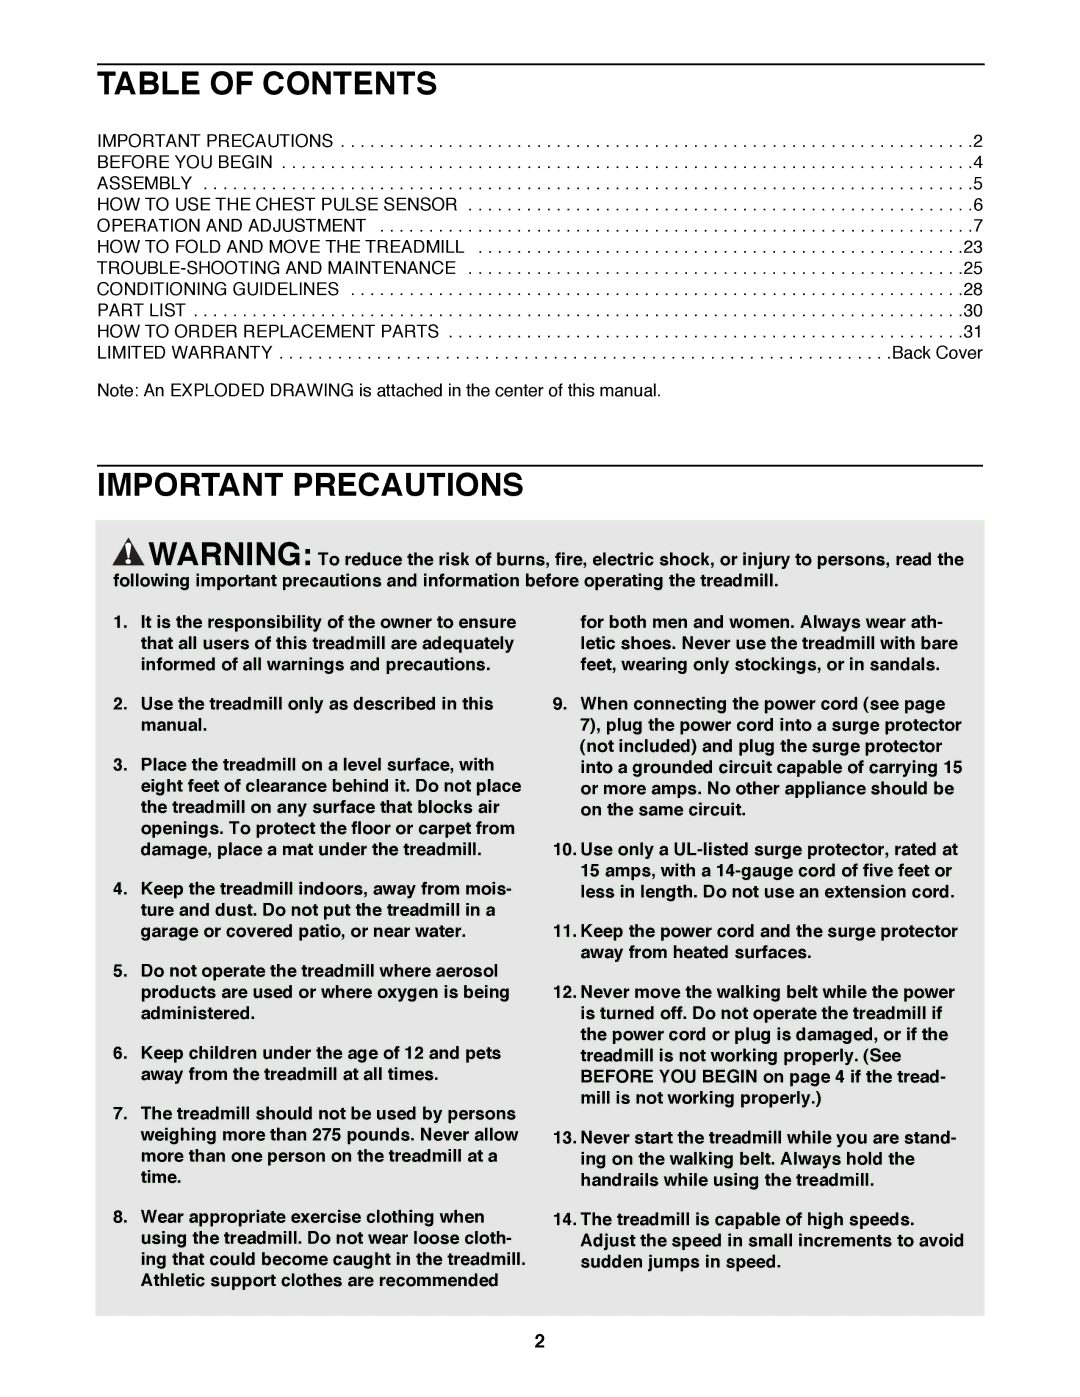 Healthrider HRTL12994 manual Table of Contents, Important Precautions 